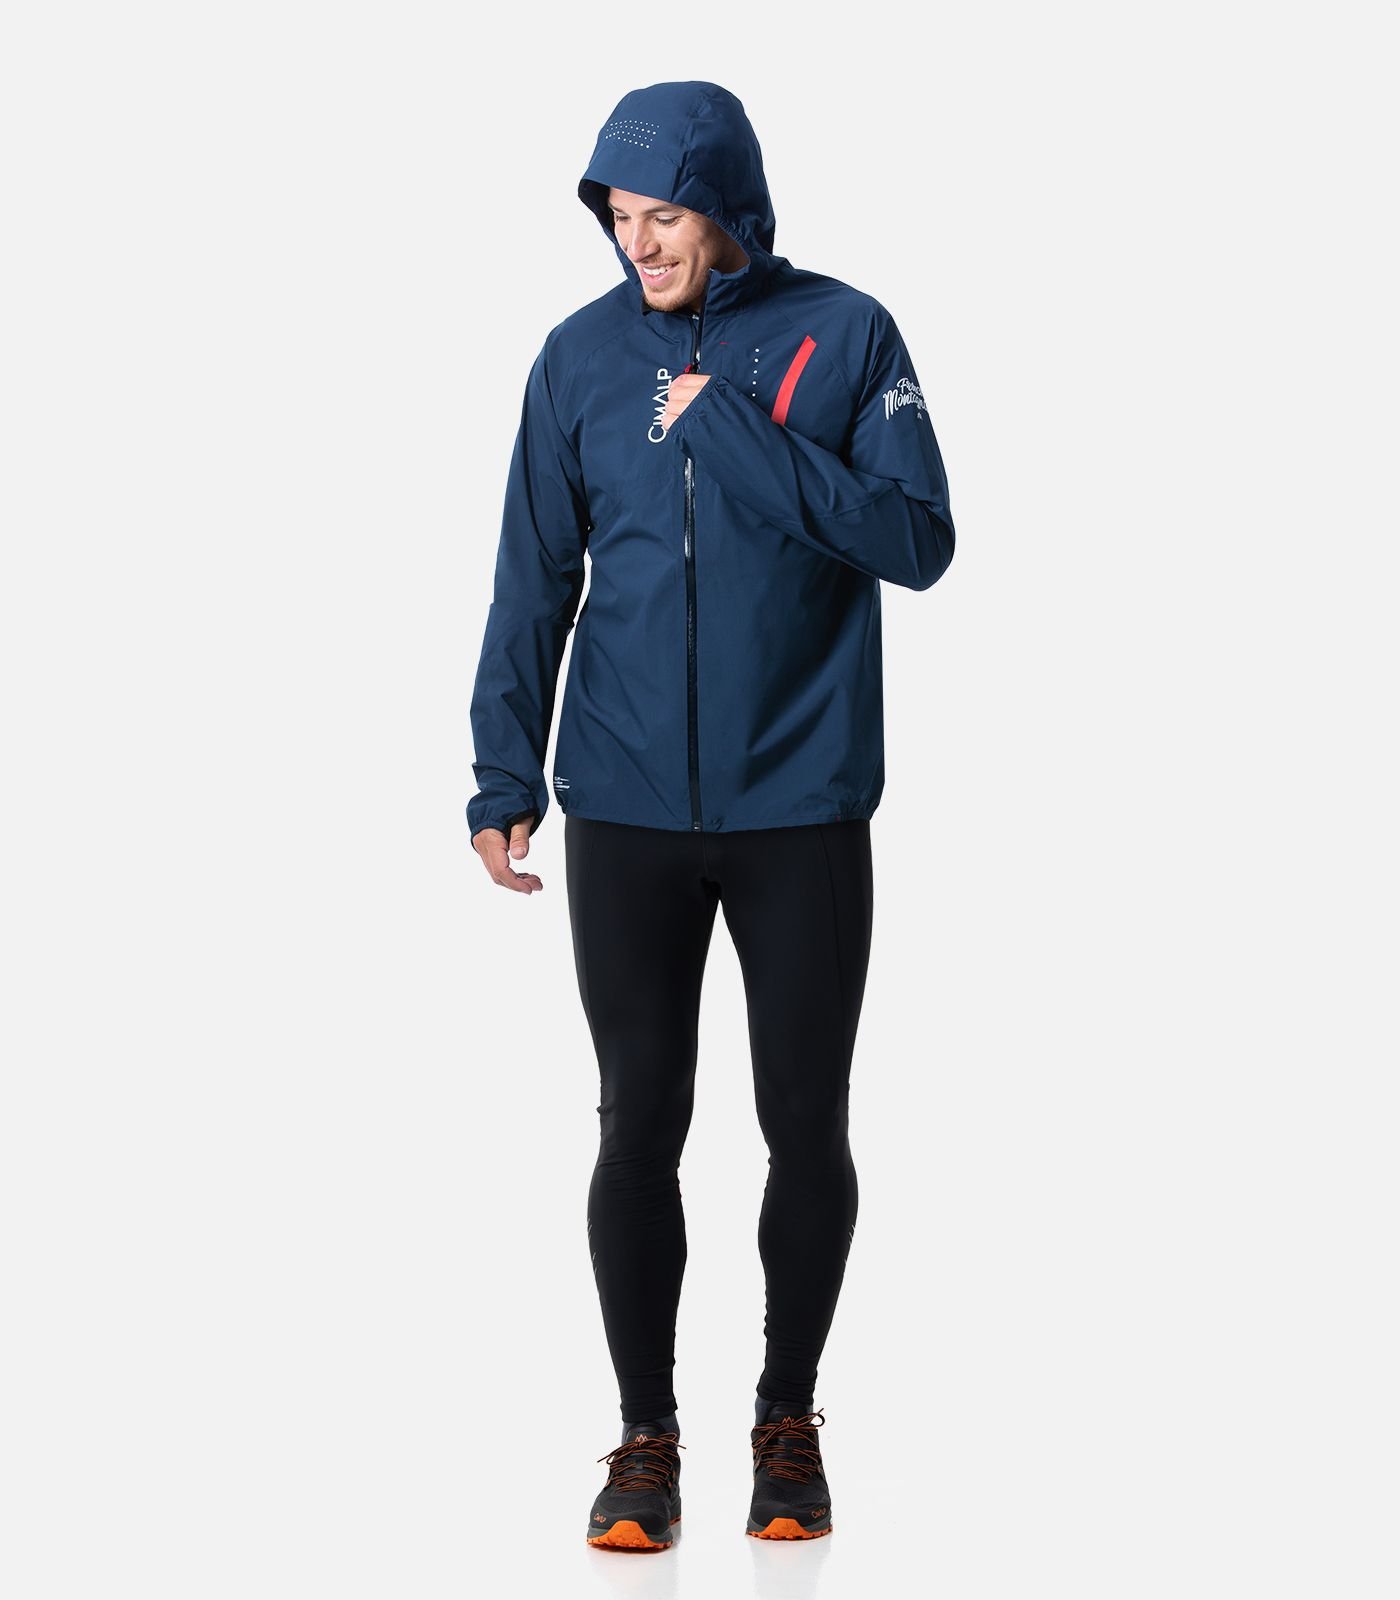 High performance Trail Running jacket